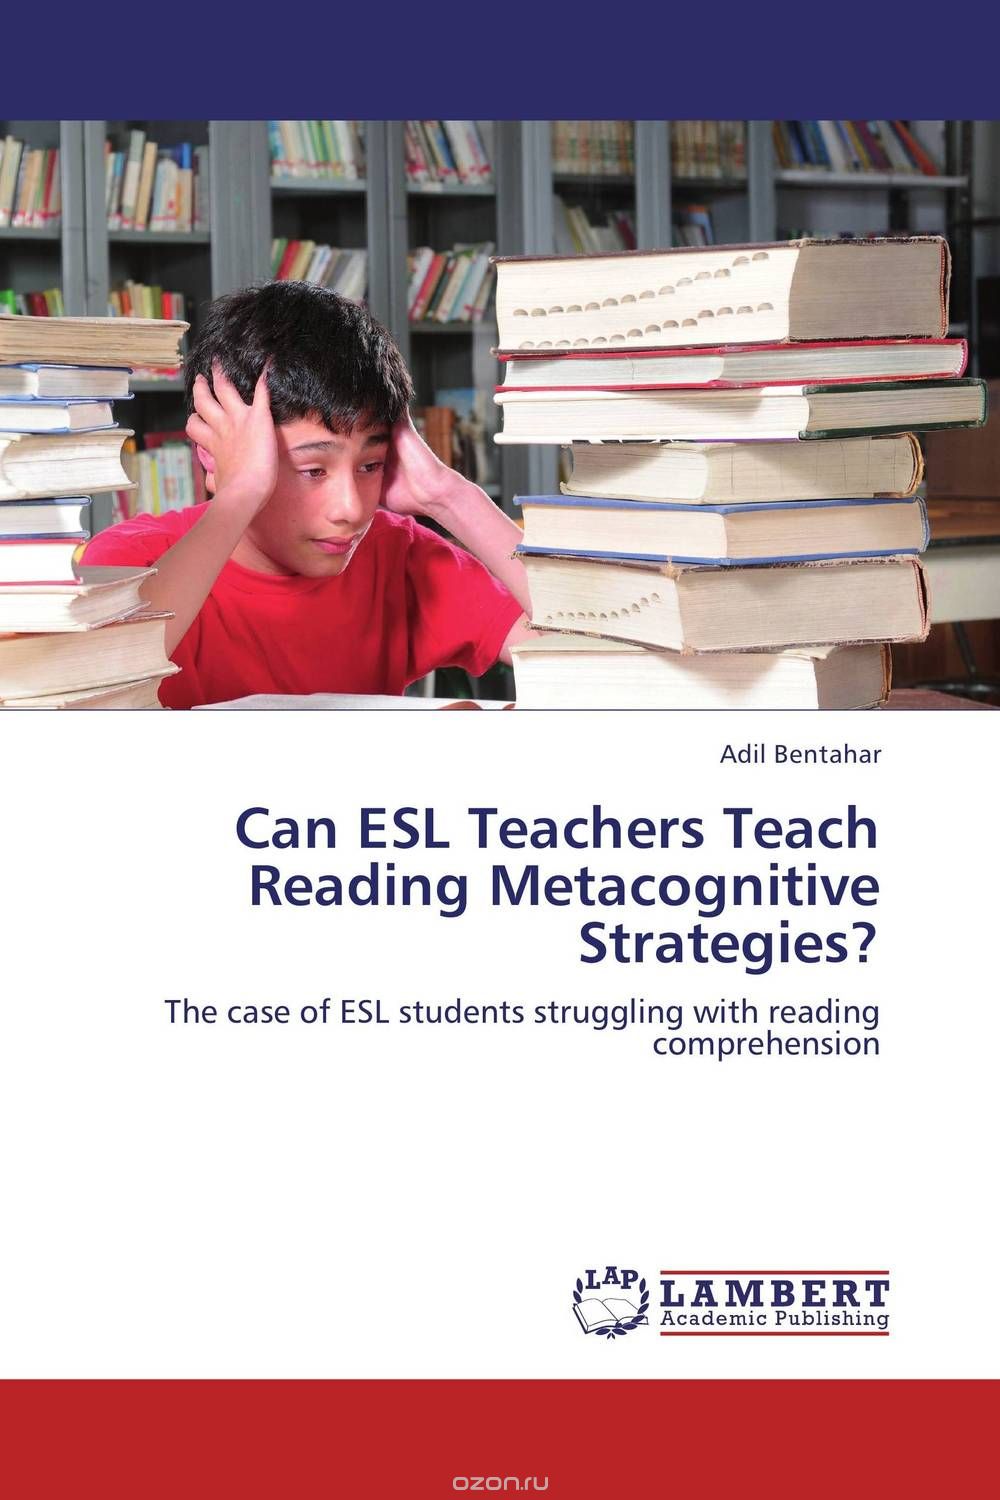 Can ESL Teachers Teach Reading Metacognitive Strategies?